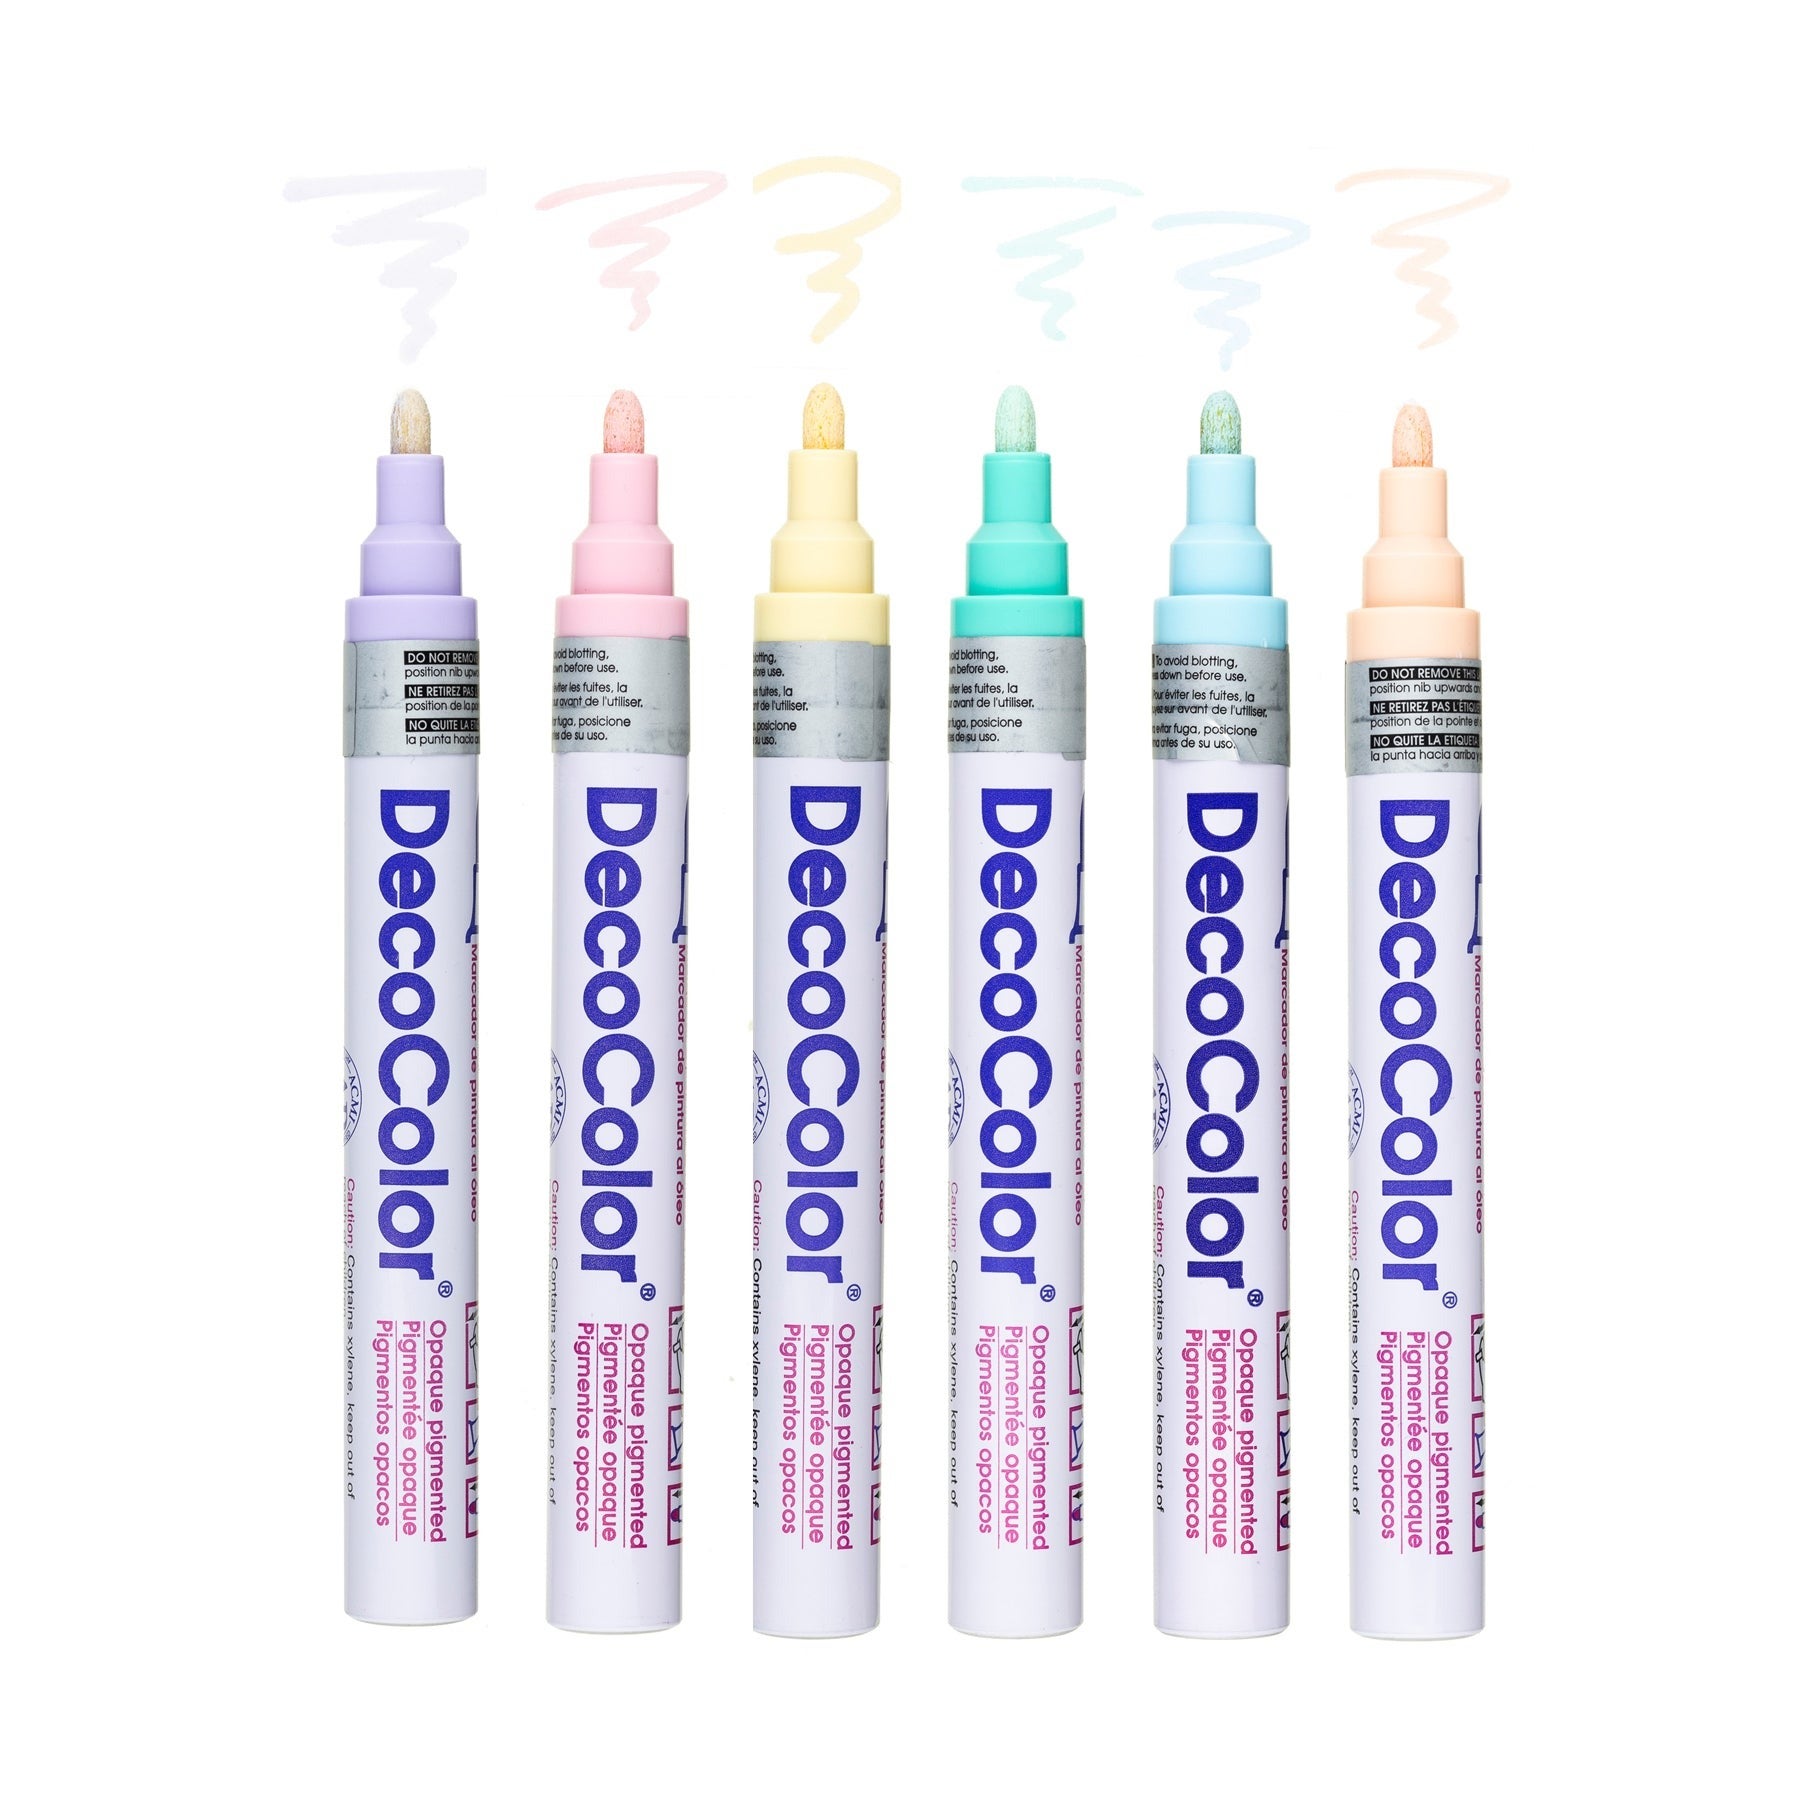 Marvy Uchida DecoColor Paint Markers 6 Oil Pens Bold Point Pastels 300-6B